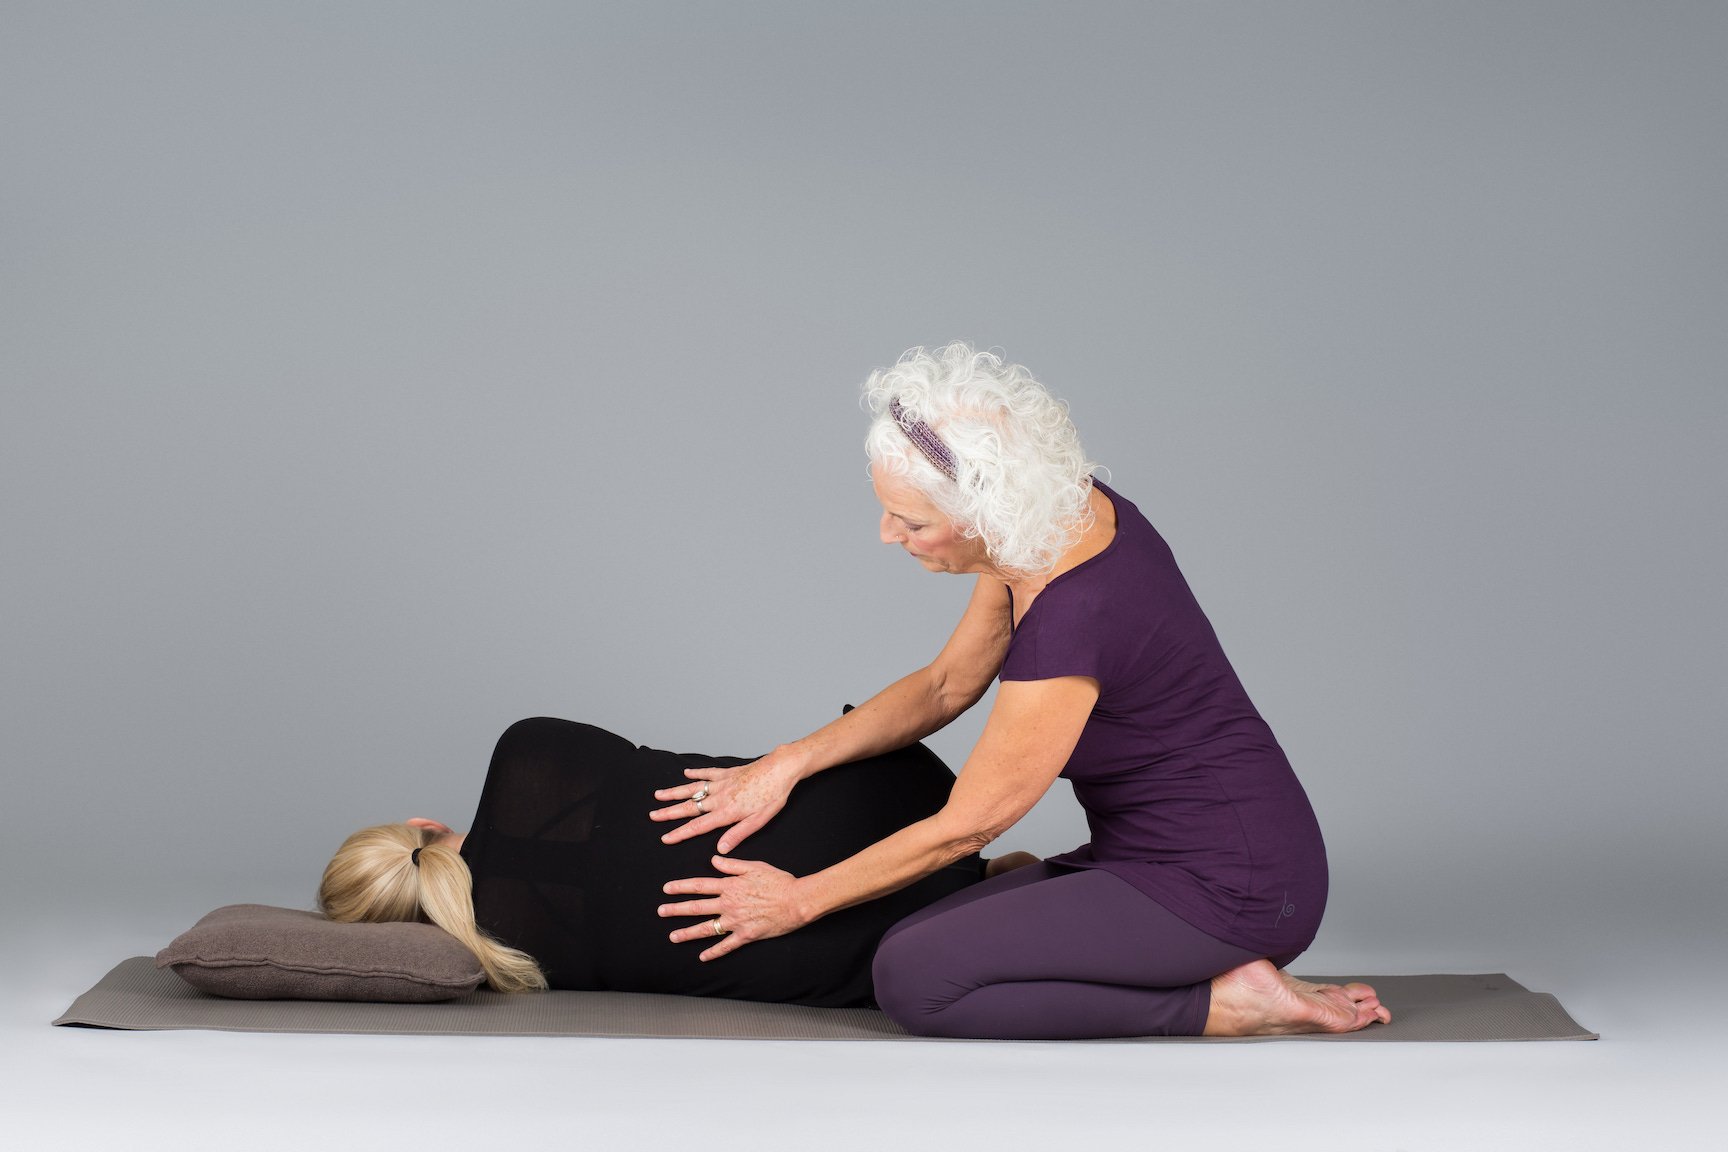 https://images.squarespace-cdn.com/content/v1/59ec5ca764b05f695b6e867d/658c005f-7f3c-488e-a658-095b33575915/Cosmic+Alignment+Yoga+Therapy+for+the+Spine+with+Leila+Stuart.jpg